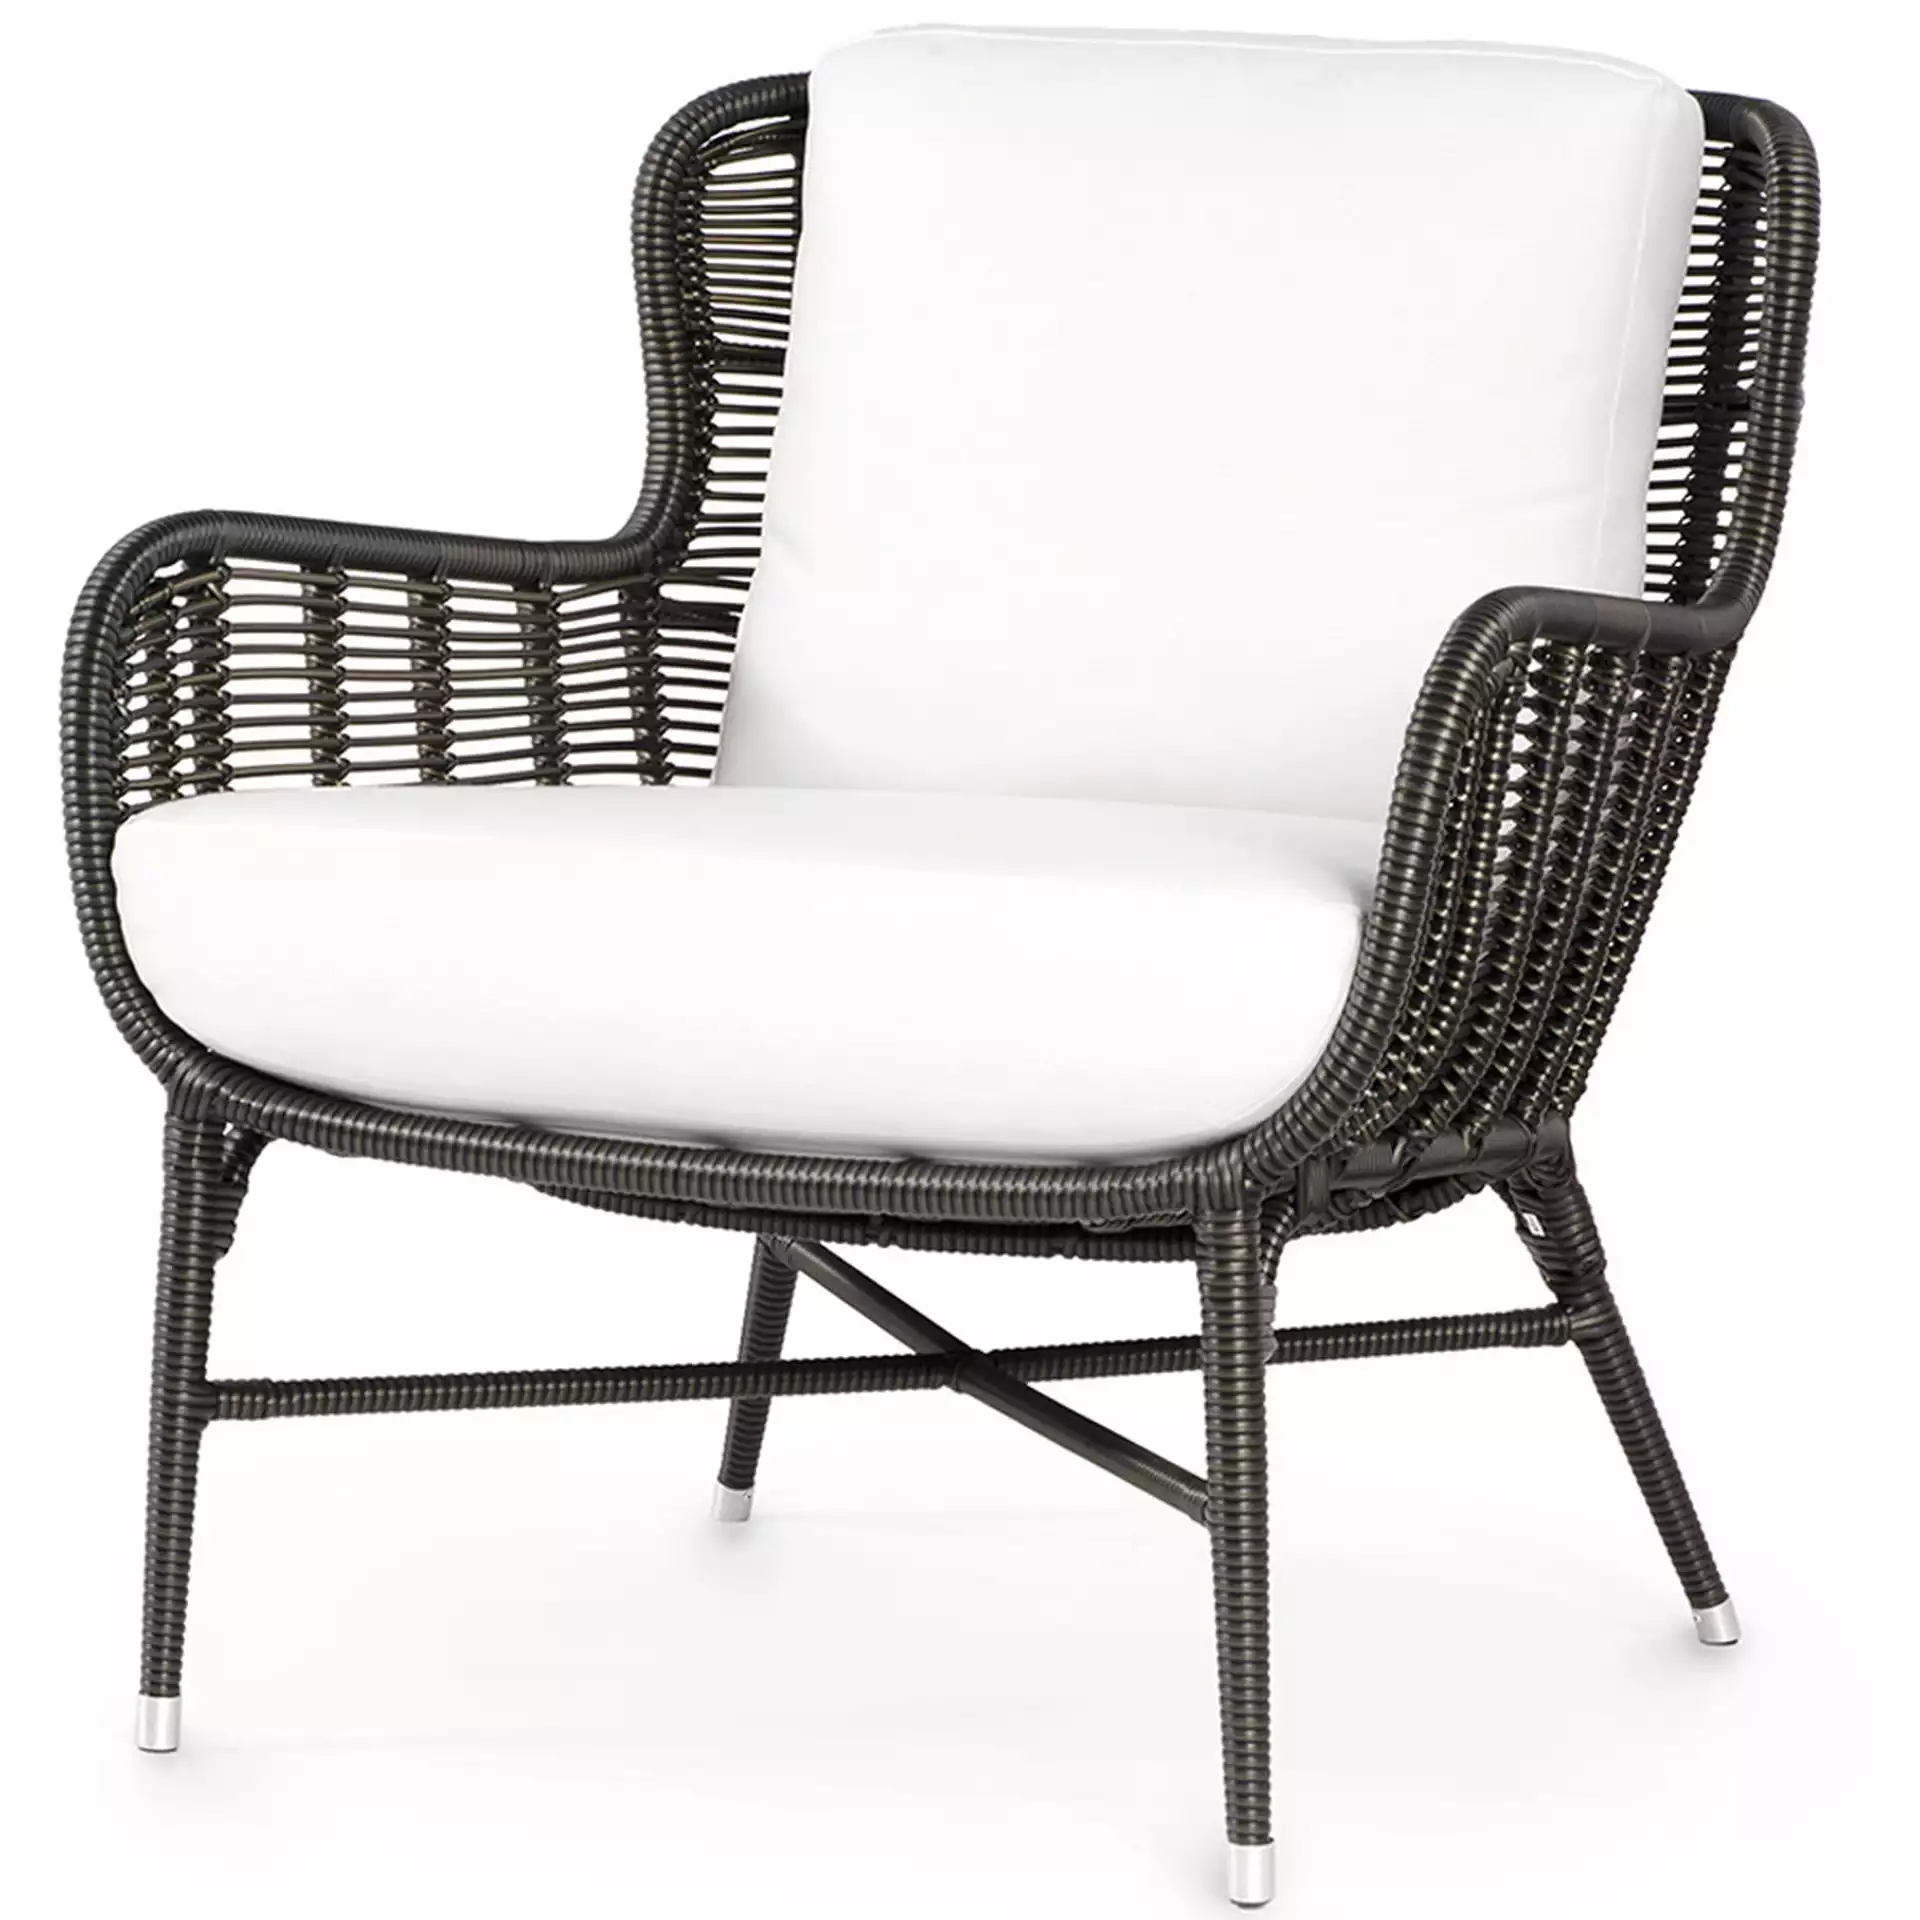 Palecek Palermo Coastal Black Woven Synthetic Wicker Aluminum Outdoor Lounge Chair